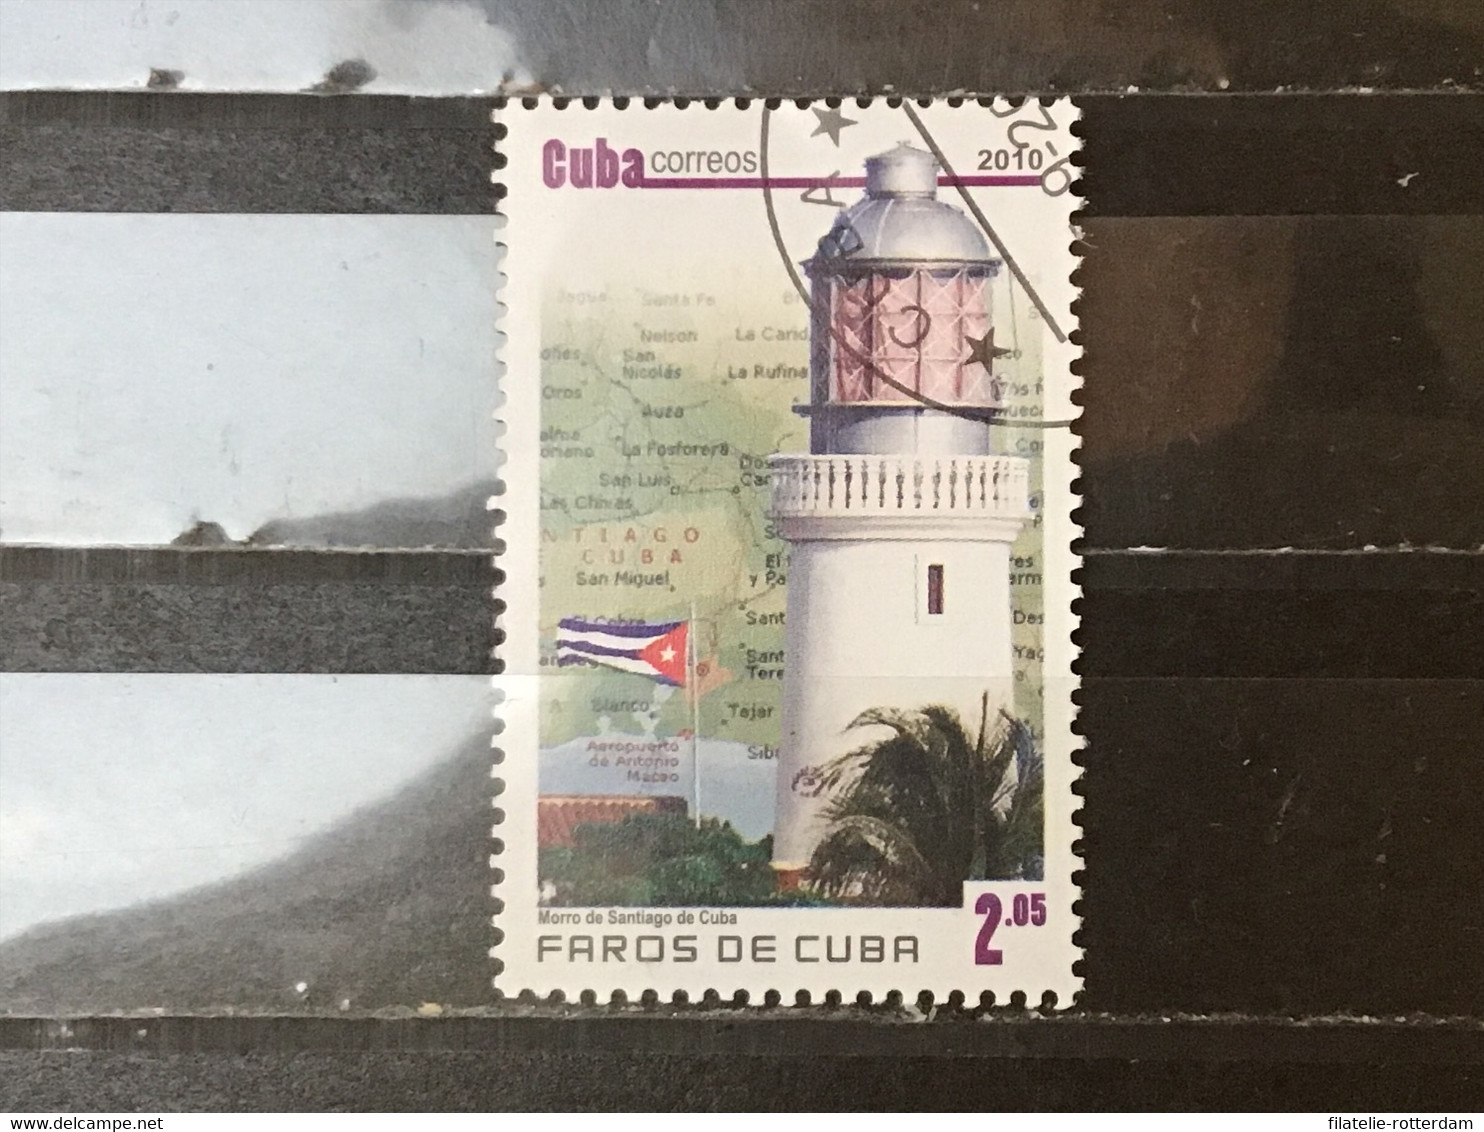 Cuba - Vuurtorens (2.05) 2010 - Used Stamps